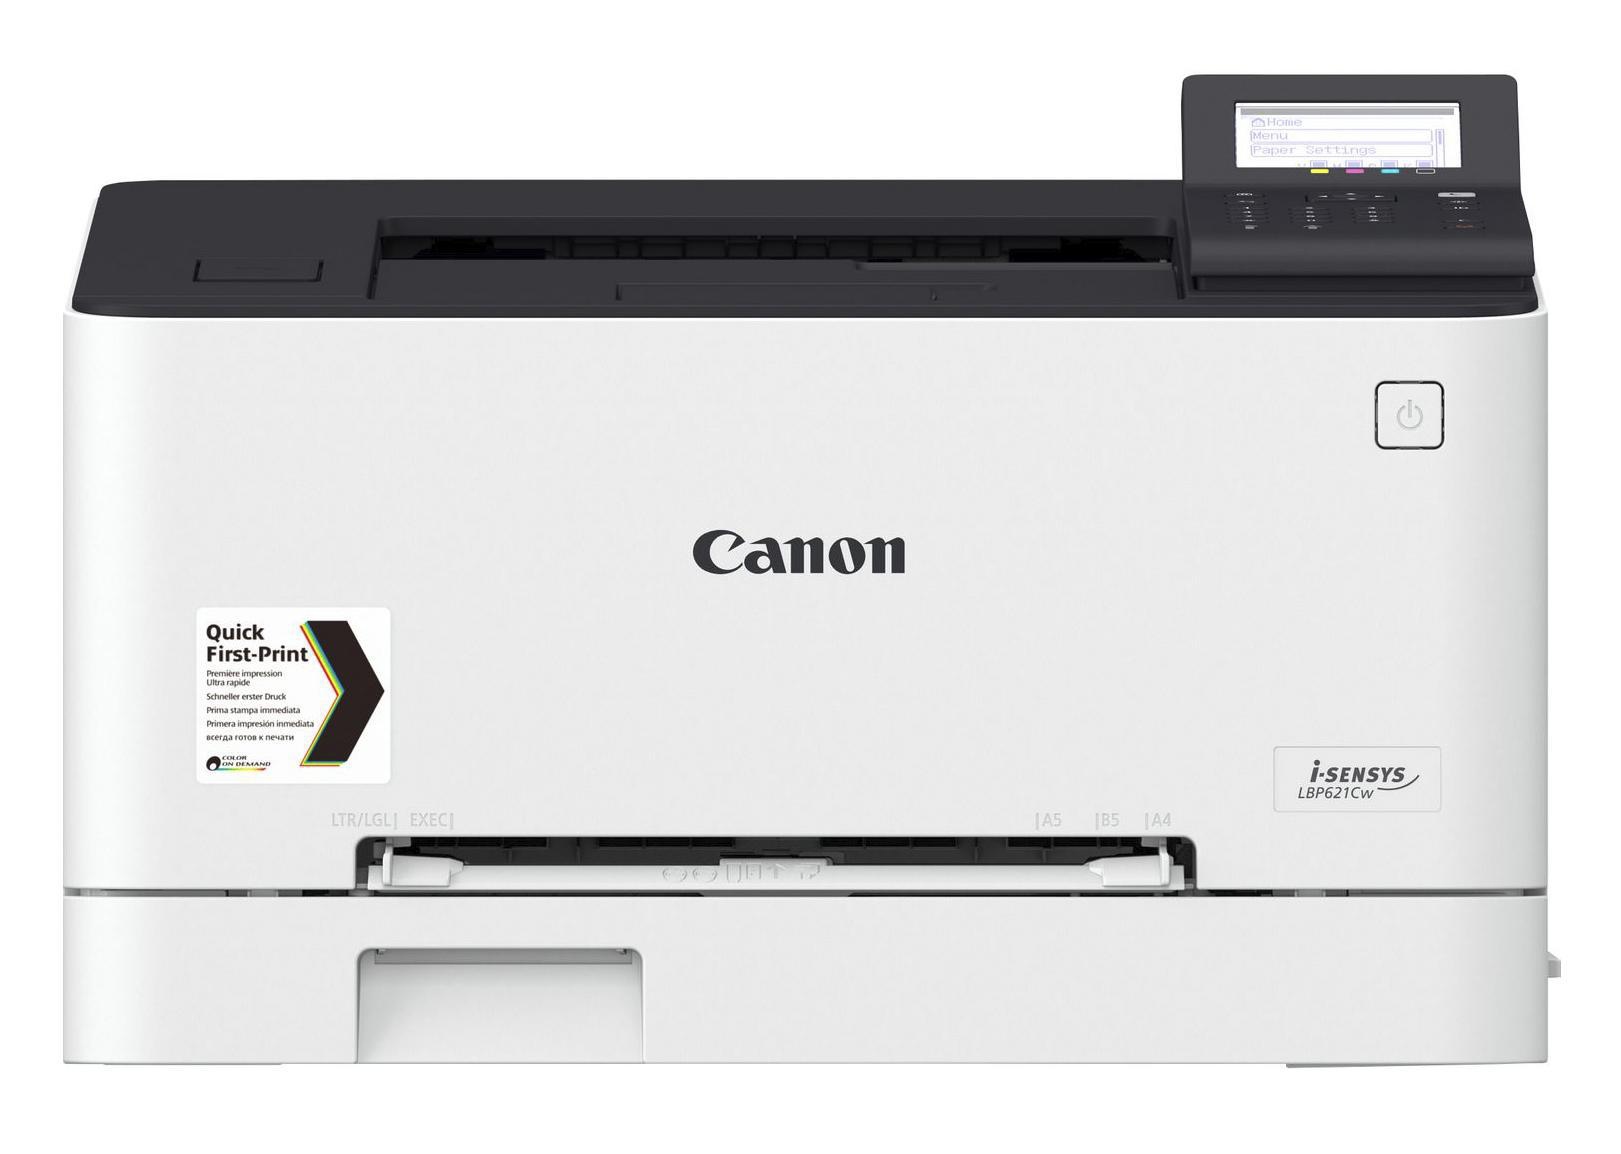 CANON WLAN Laserdrucker LBP621CW Netzwerkfähig Laser i-SENSYS